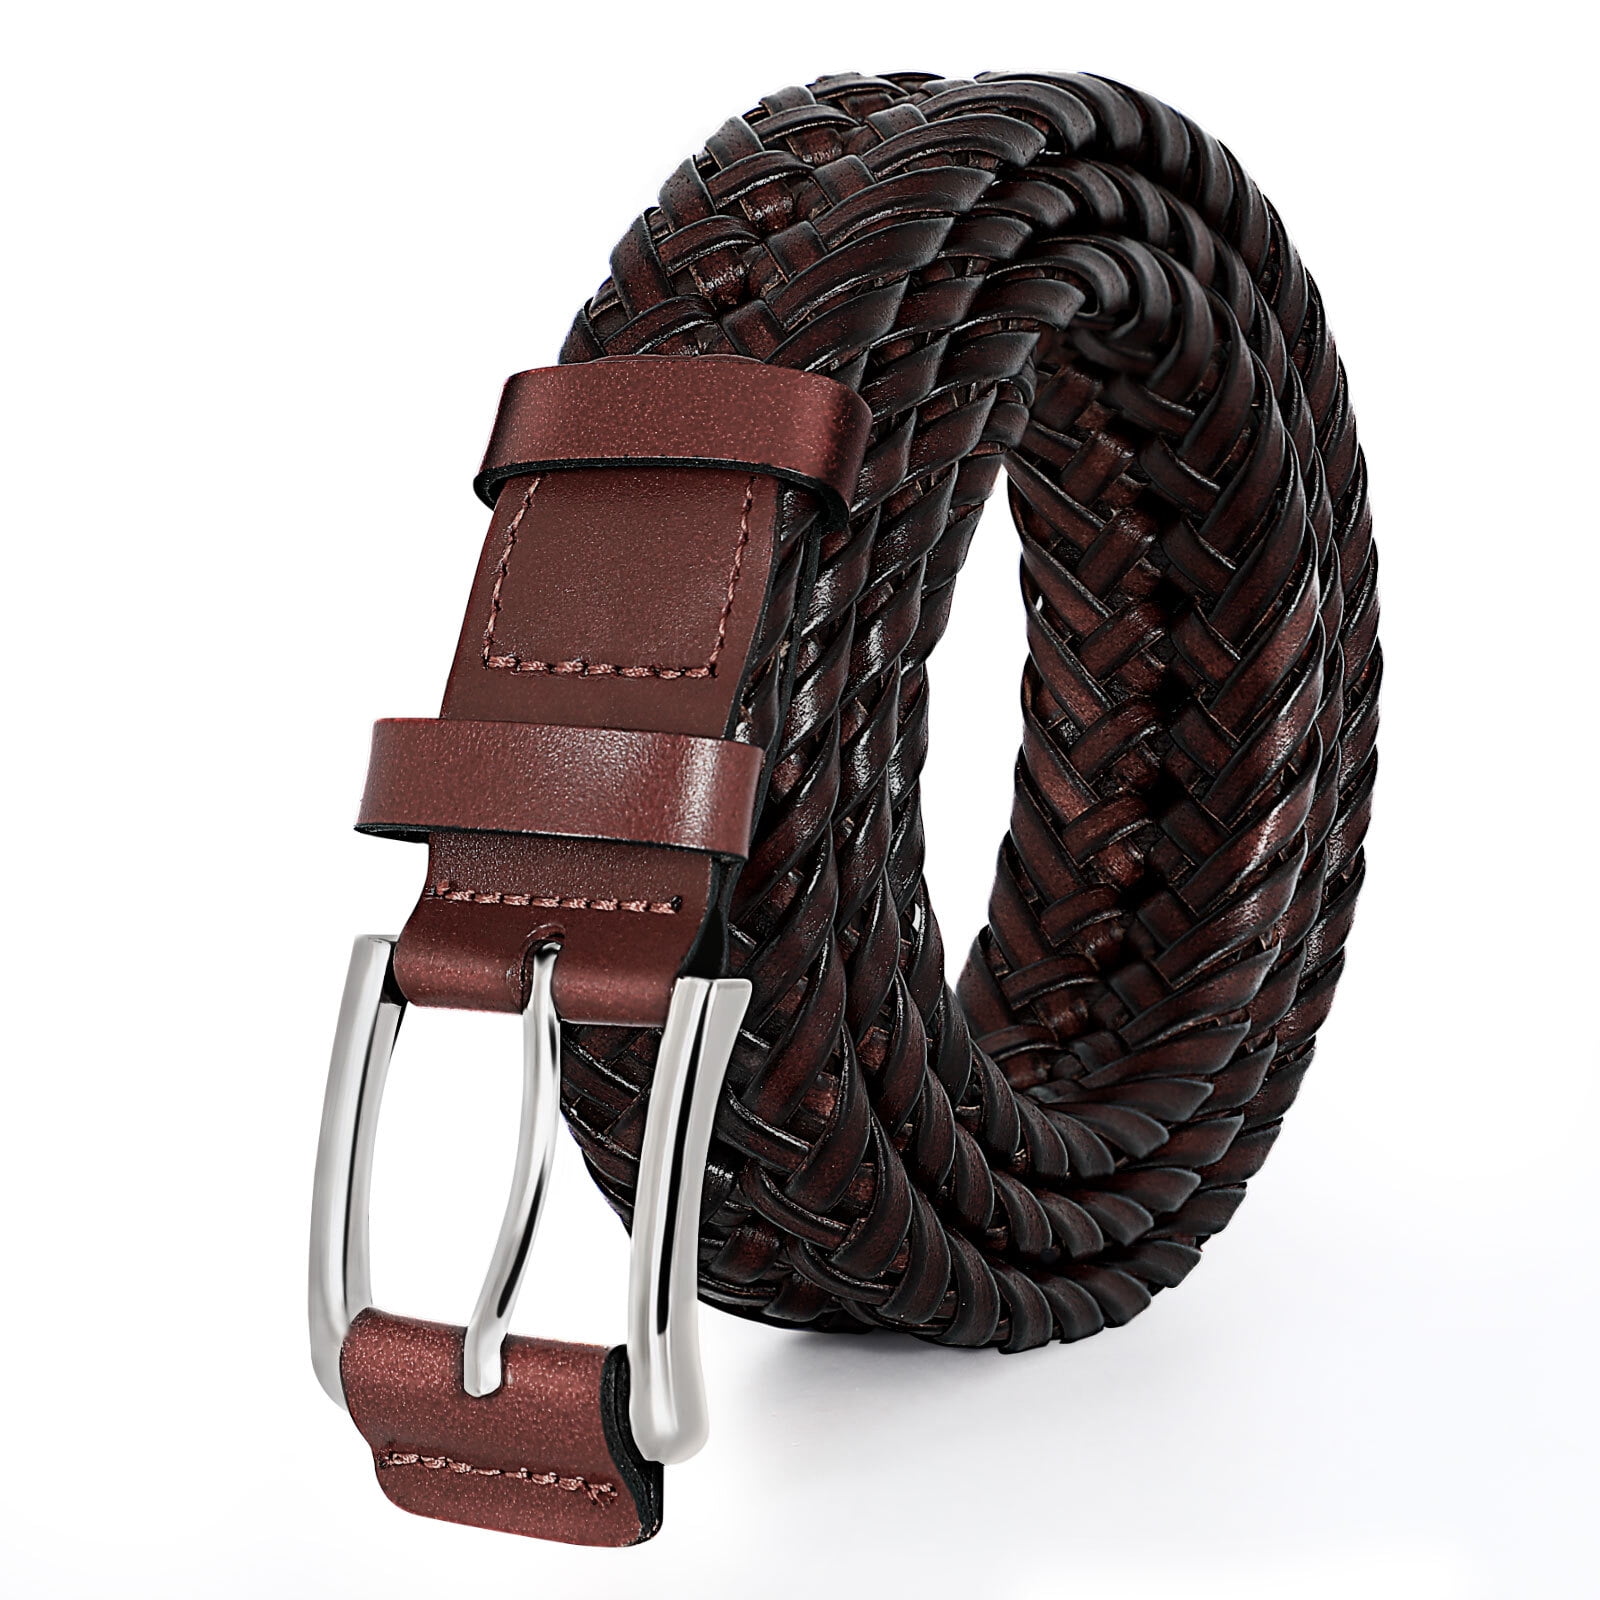 WHIPPY Braided Leather Belts for Men, Mens Woven Belt for Jeans